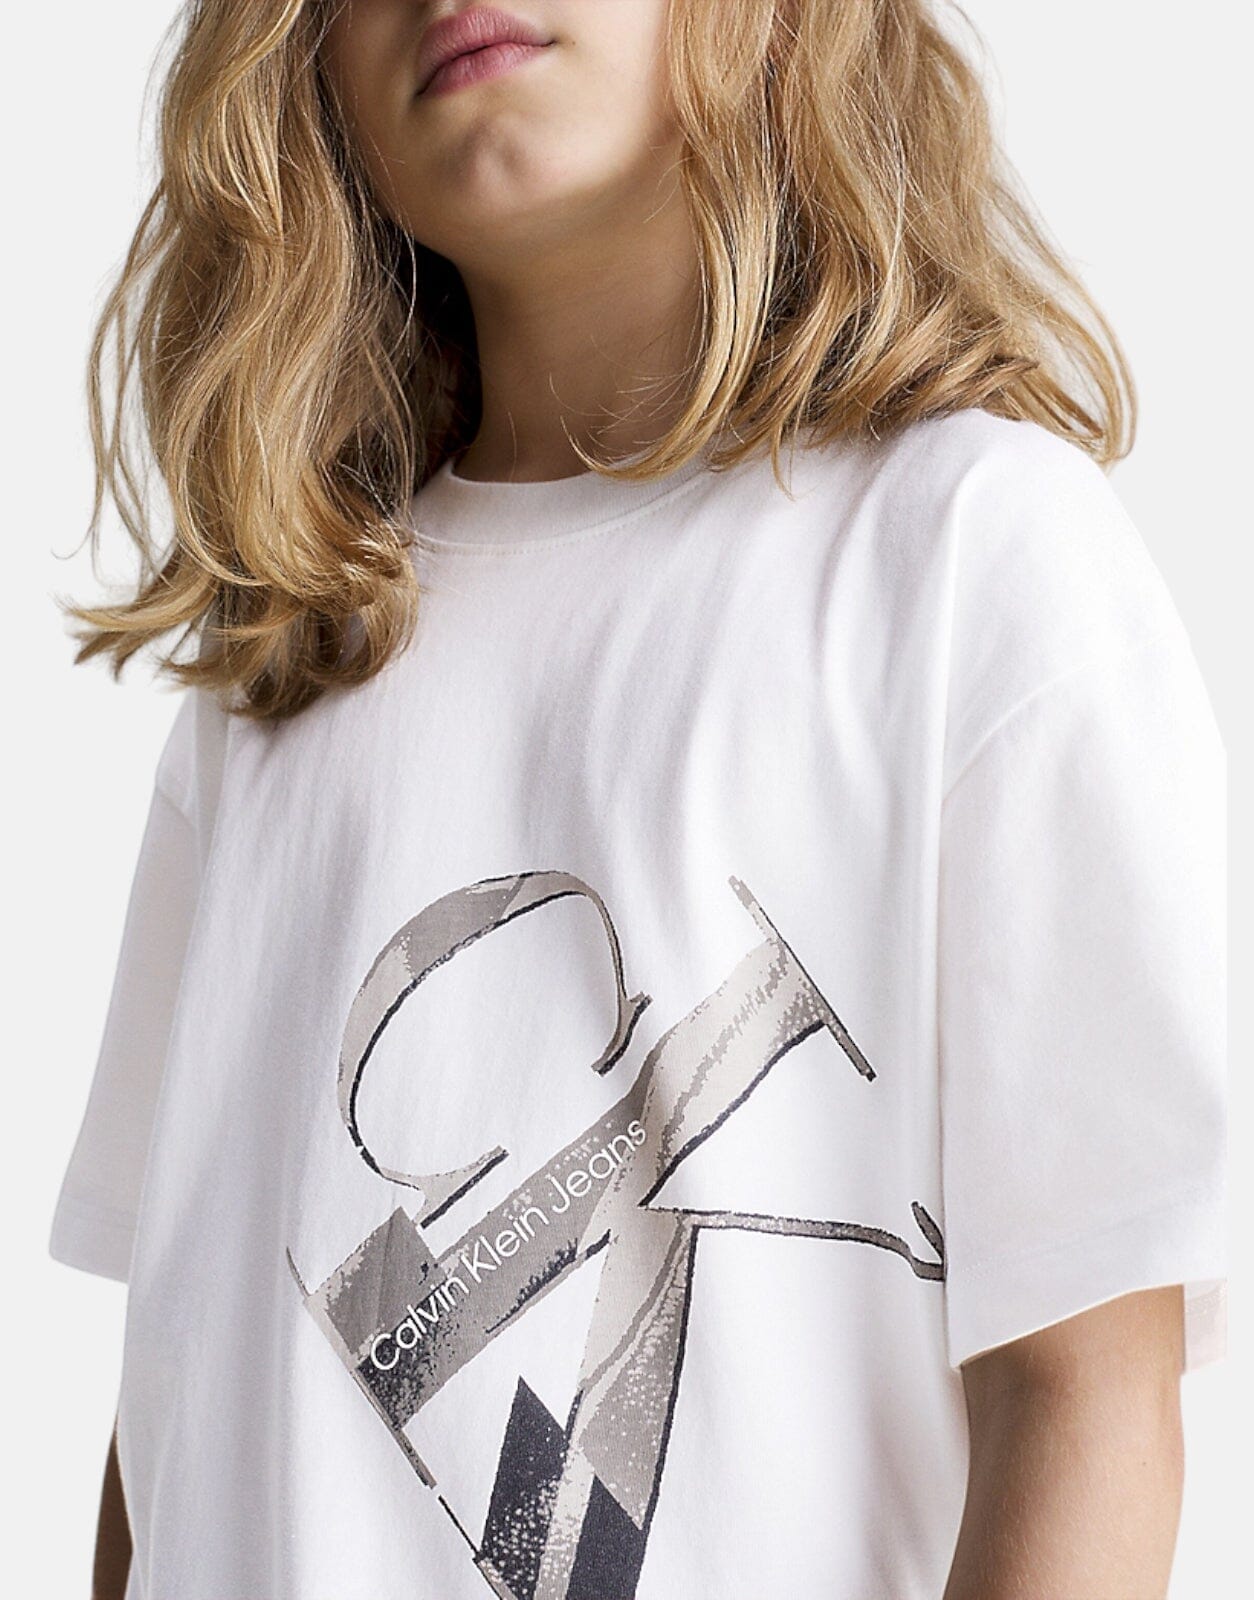 Calvin Klein Kids Hyper Real Monogram T-Shirt - Subwear